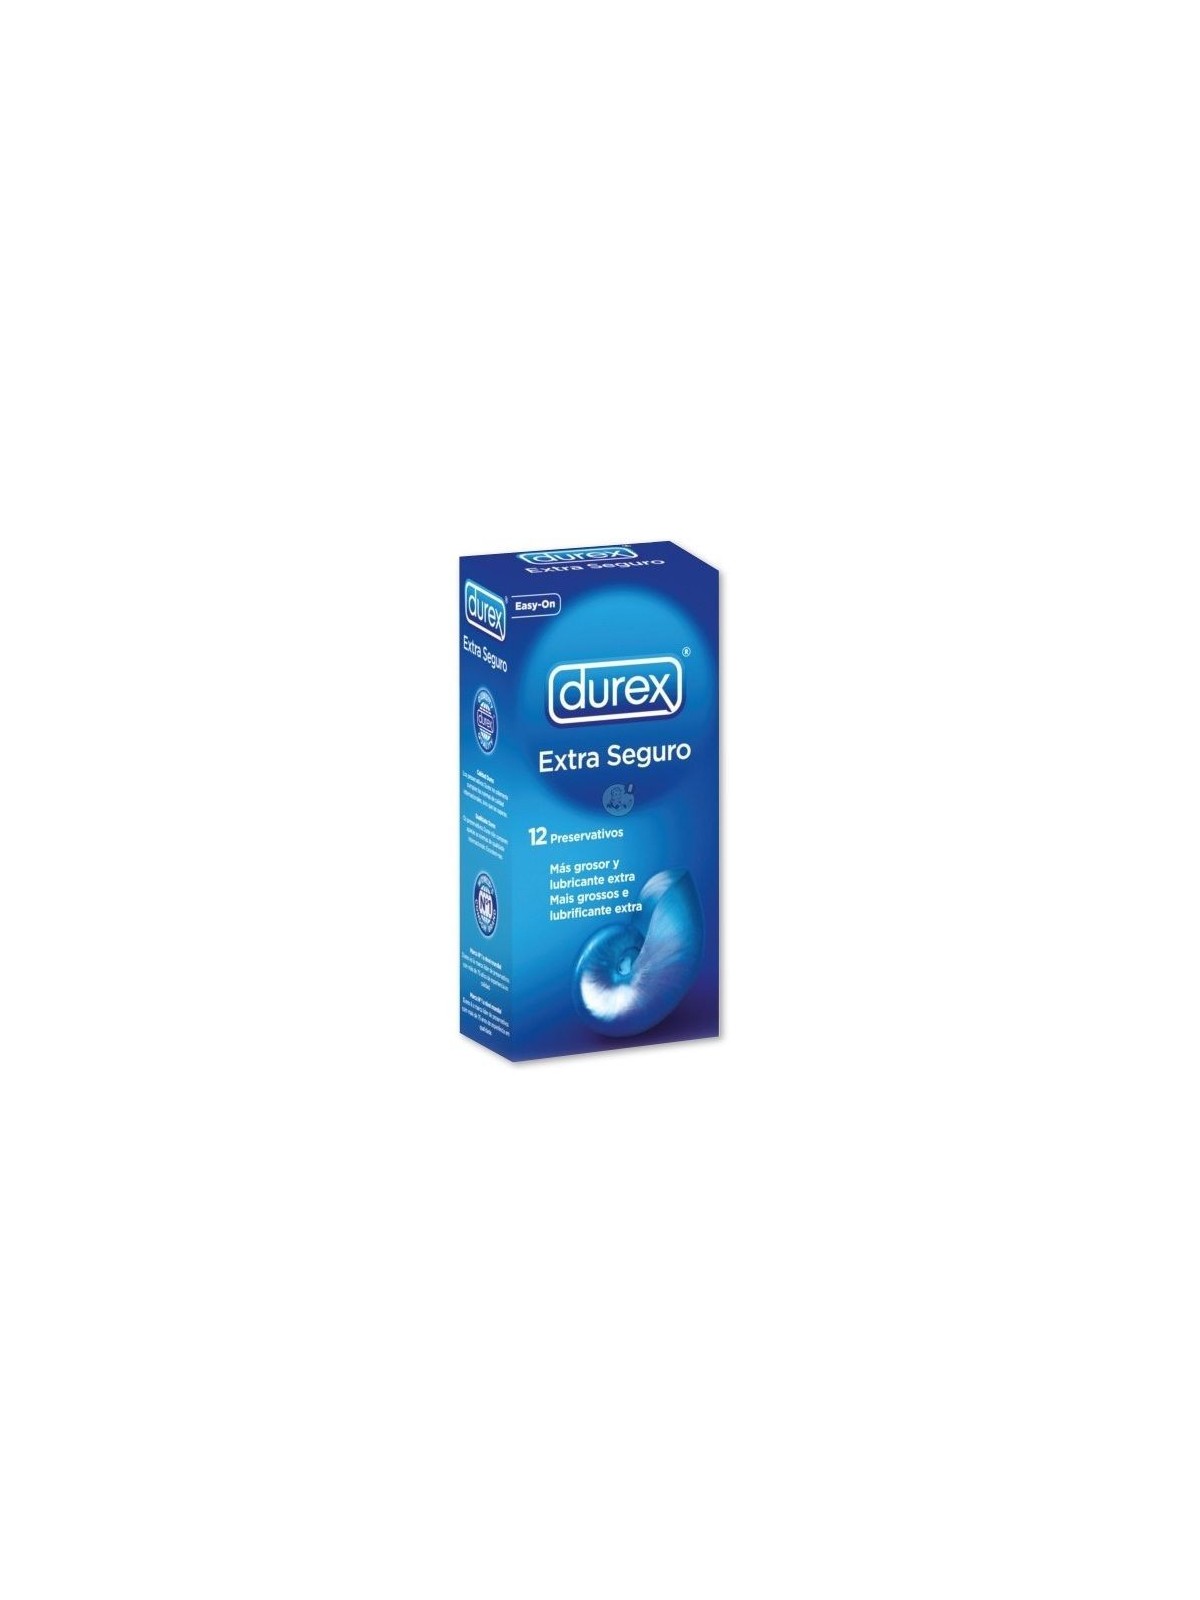 Durex Extra Seguro 12 uds - Comprar Condones naturales Durex - Preservativos naturales (1)